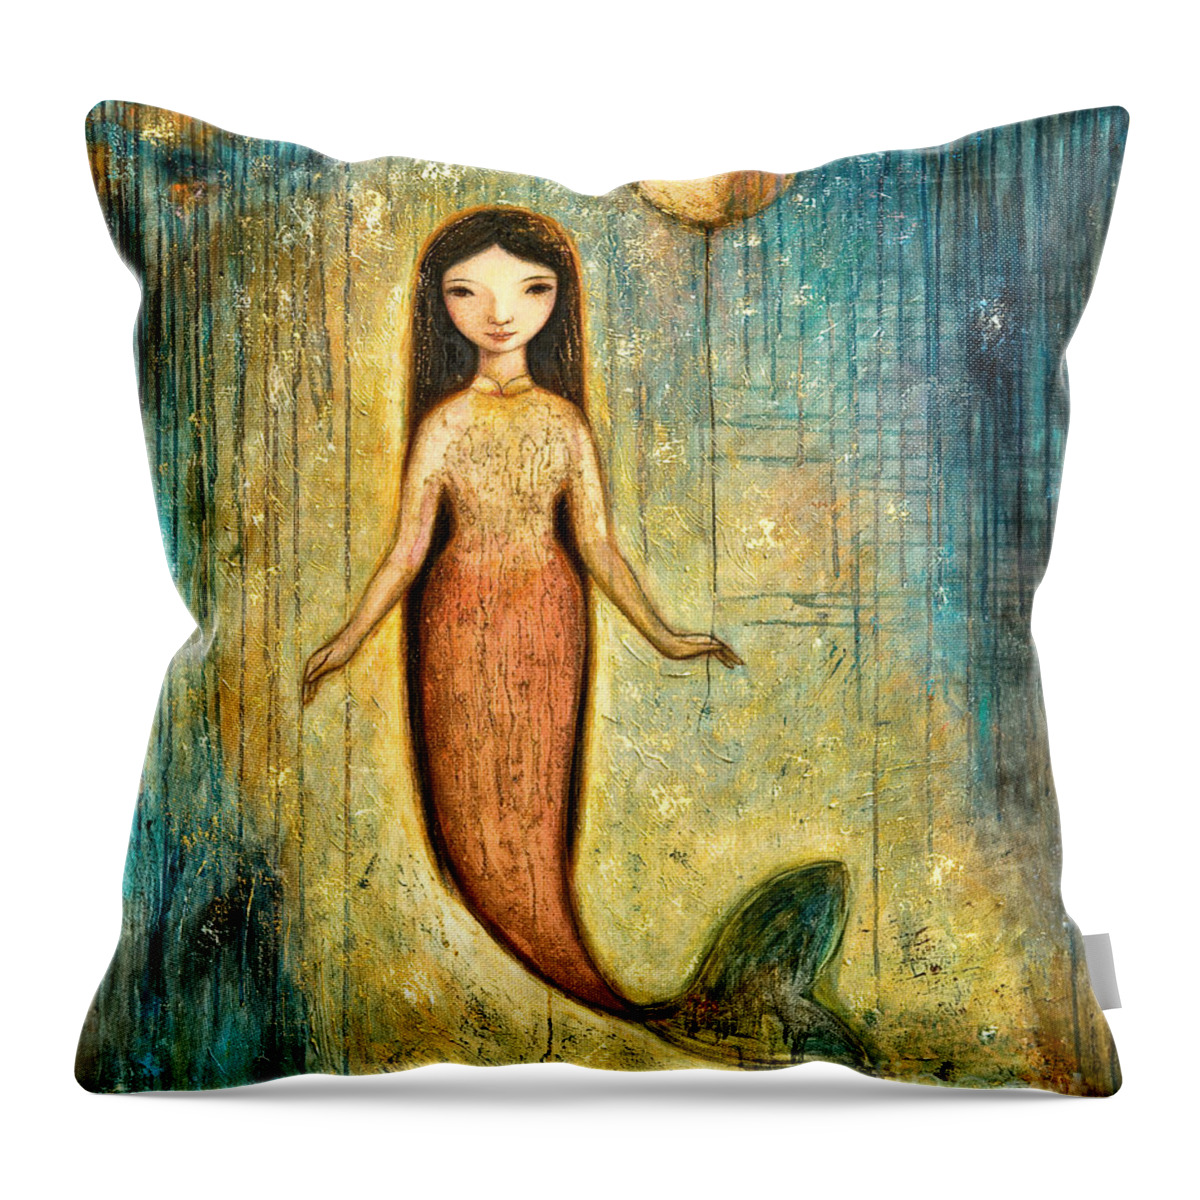 Mermaid Art Throw Pillow featuring the painting Balance by Shijun Munns